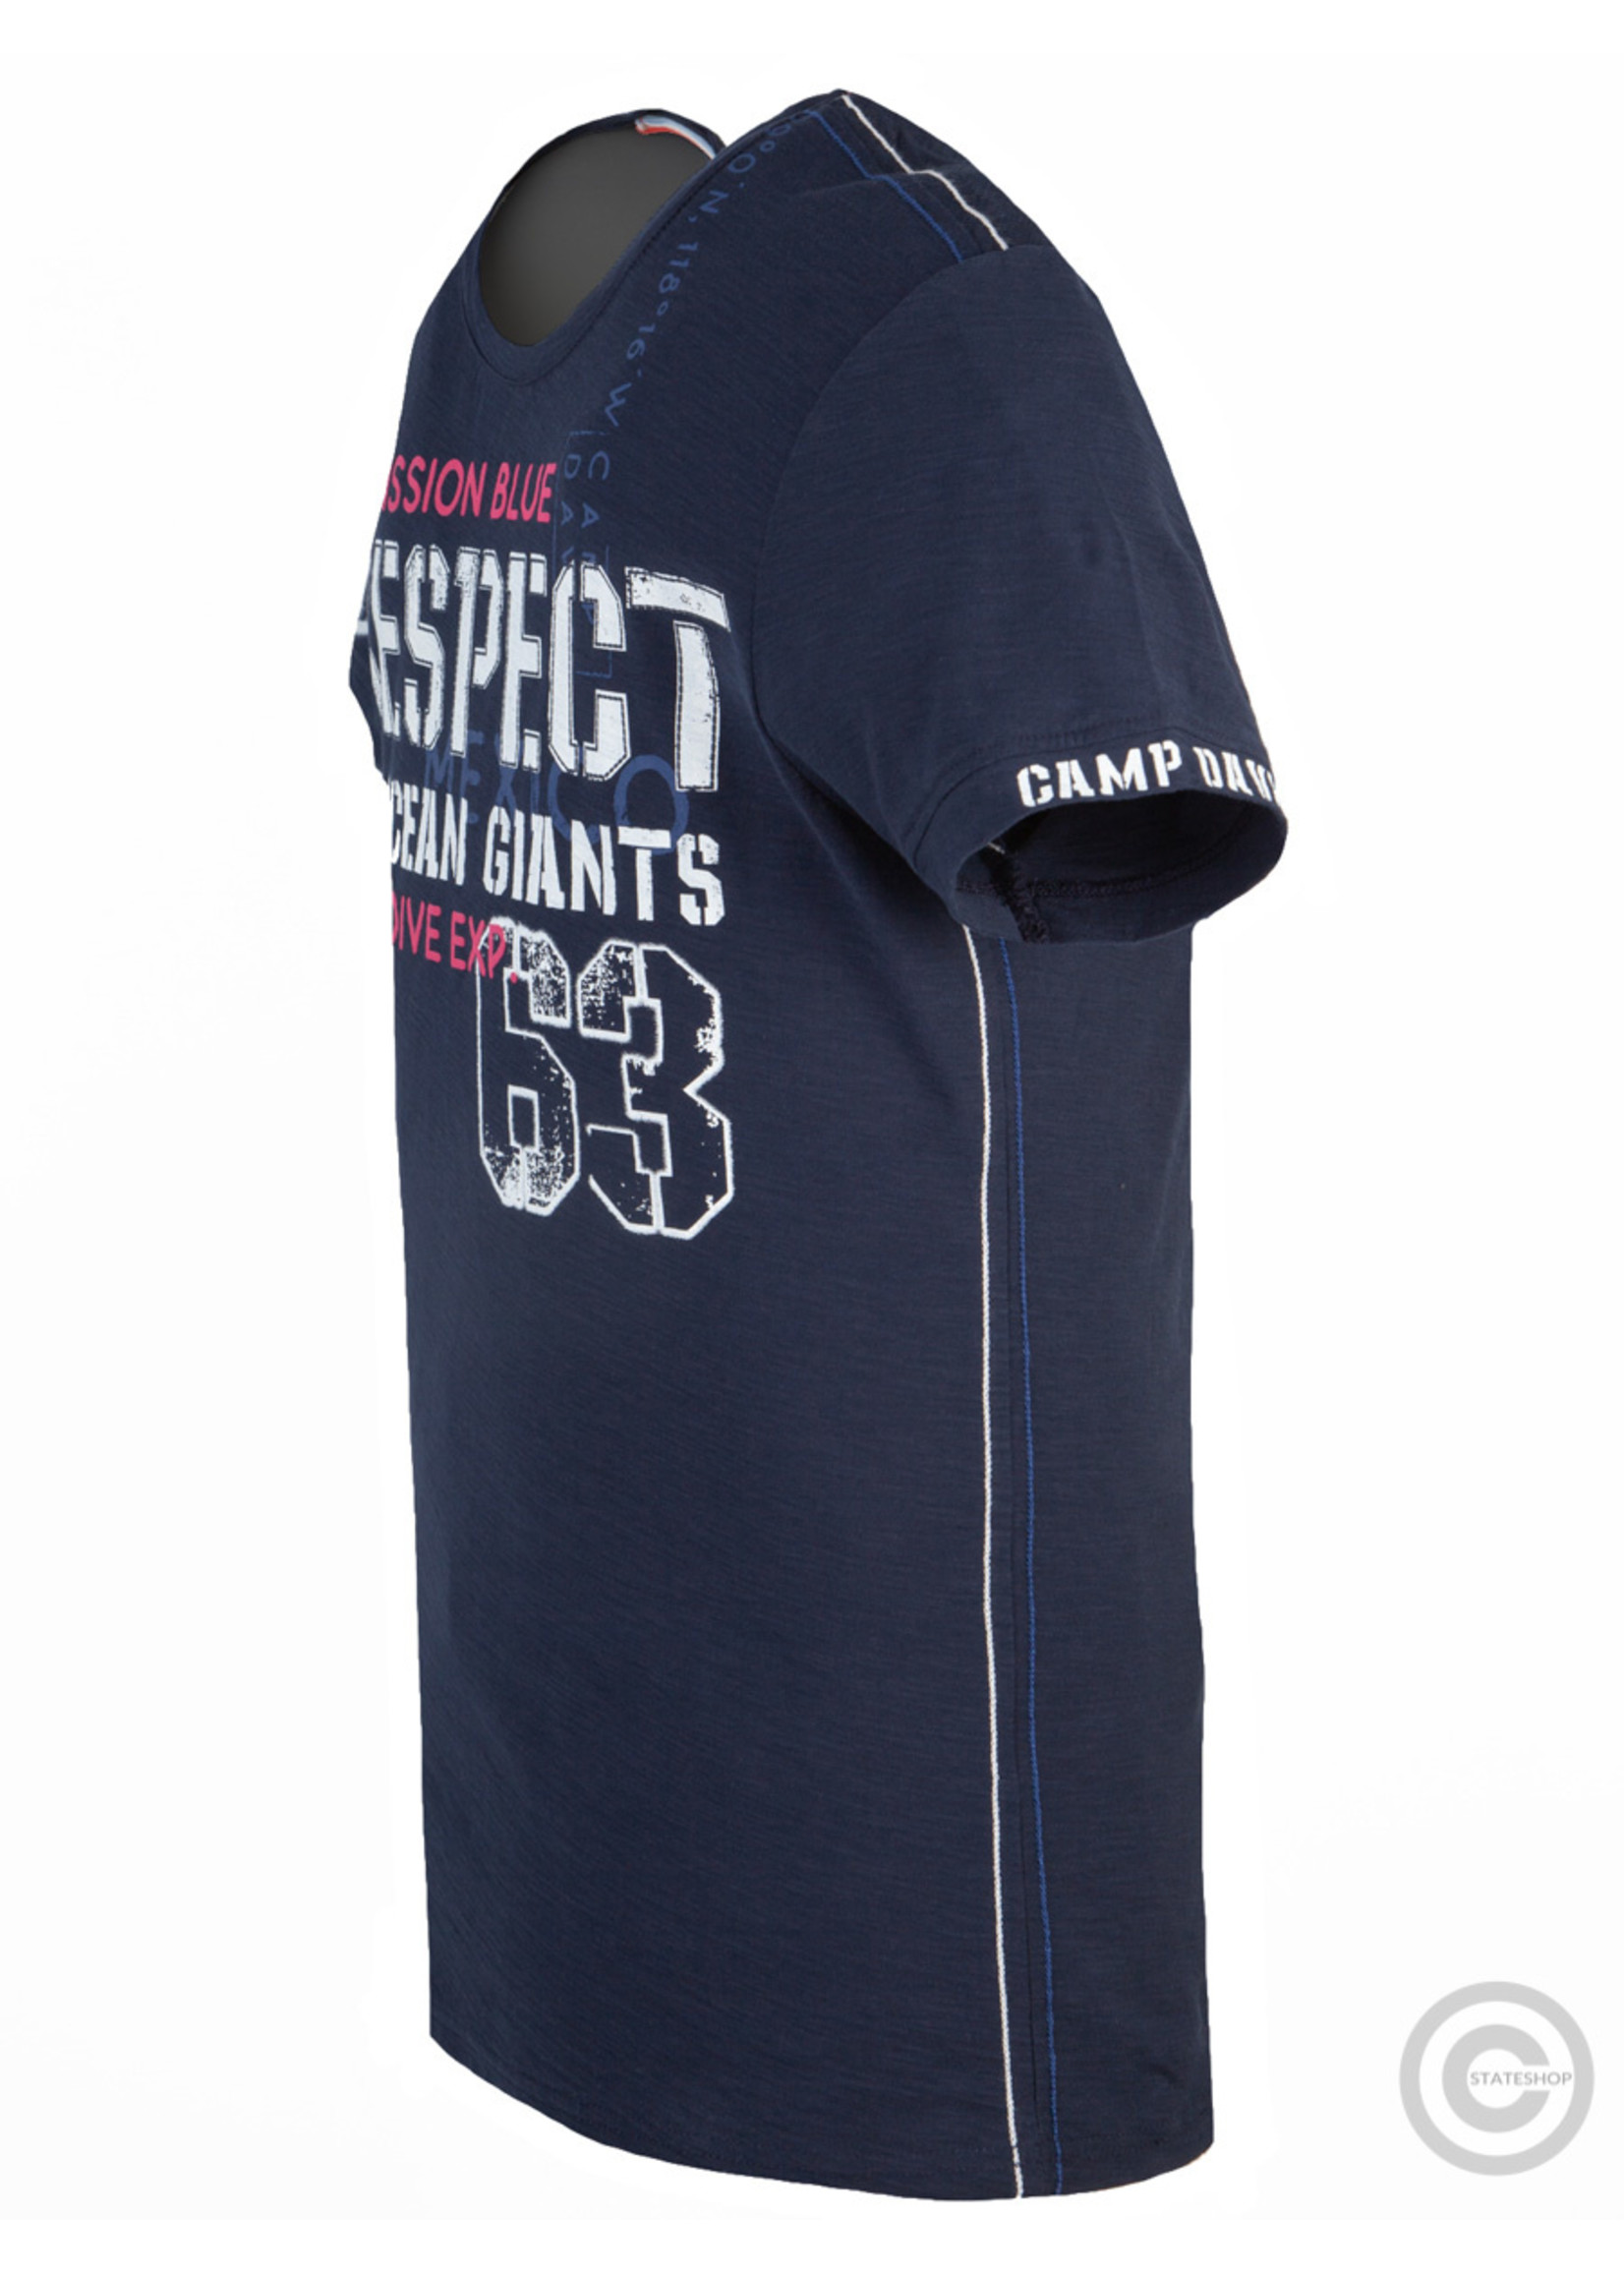 Camp David  Camp David ® T-shirt made of flame yarn "Mission Blue" Navy